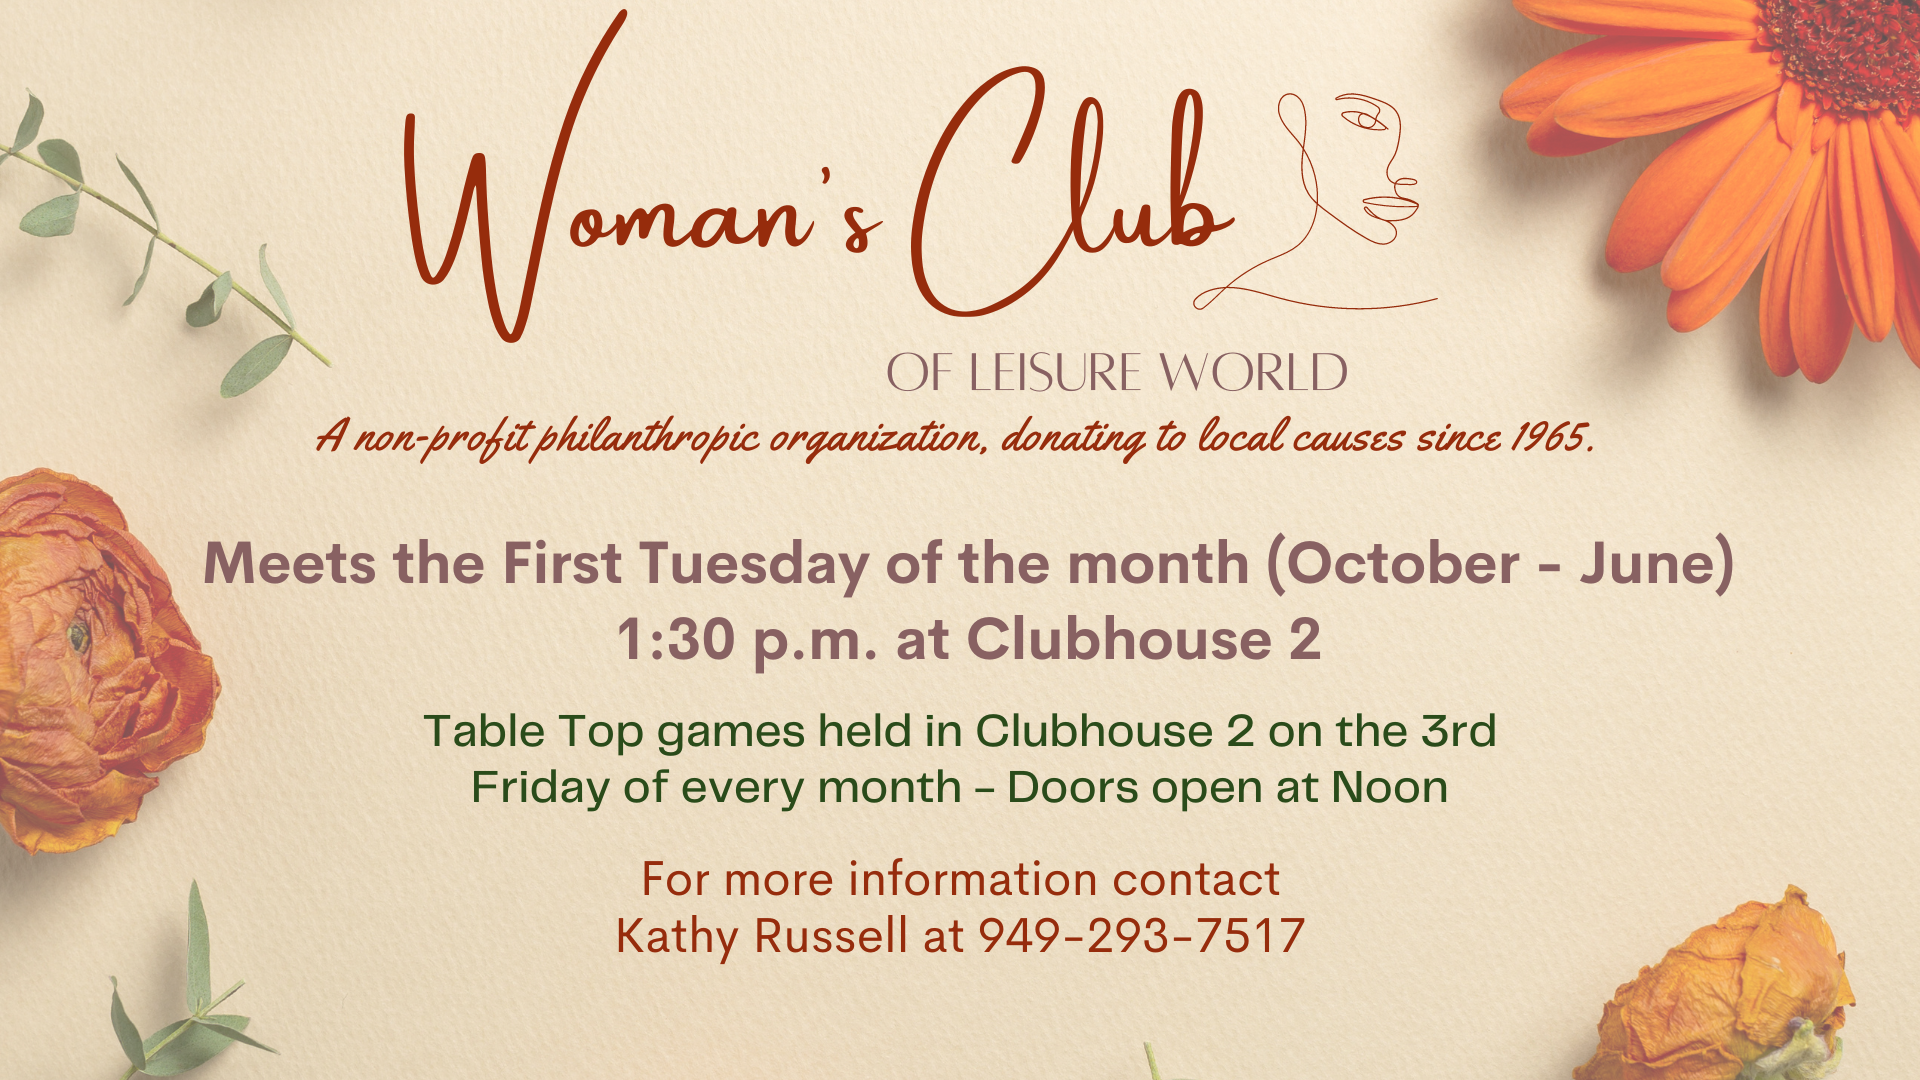 Woman's Club